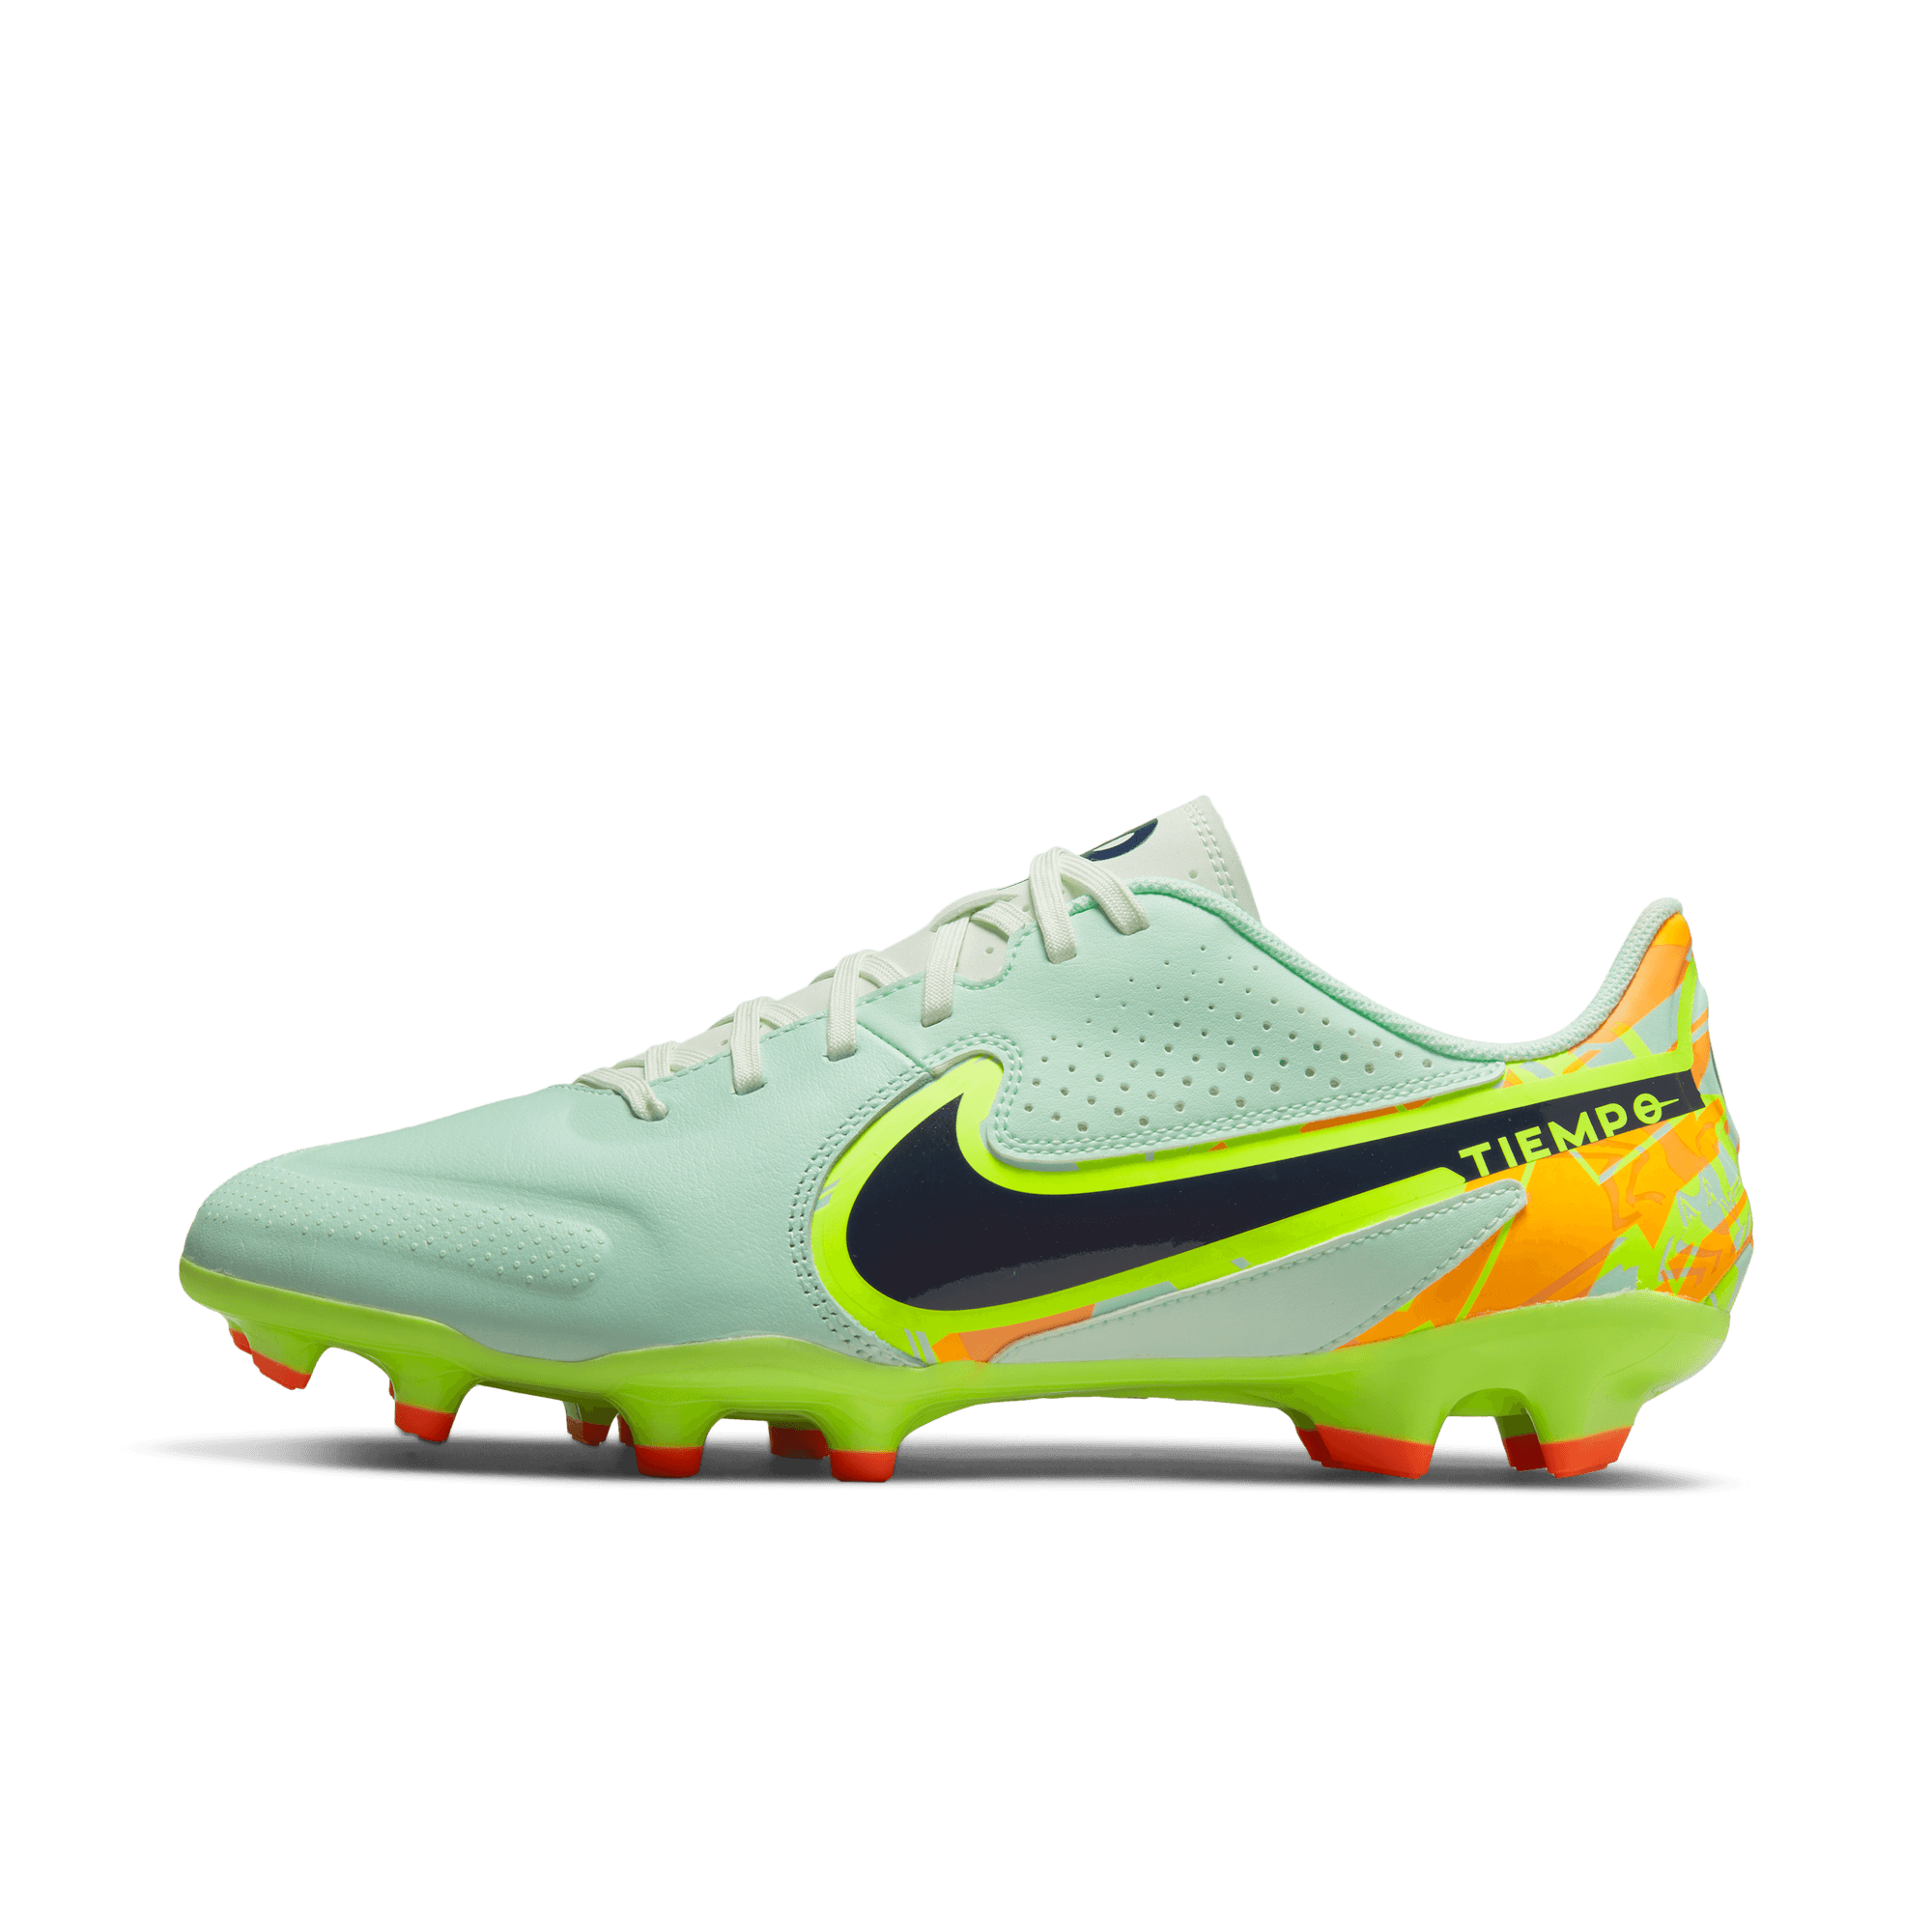 stefanssoccer.com:Nike Tiempo Firm Ground Soccer Cleats - Light Green